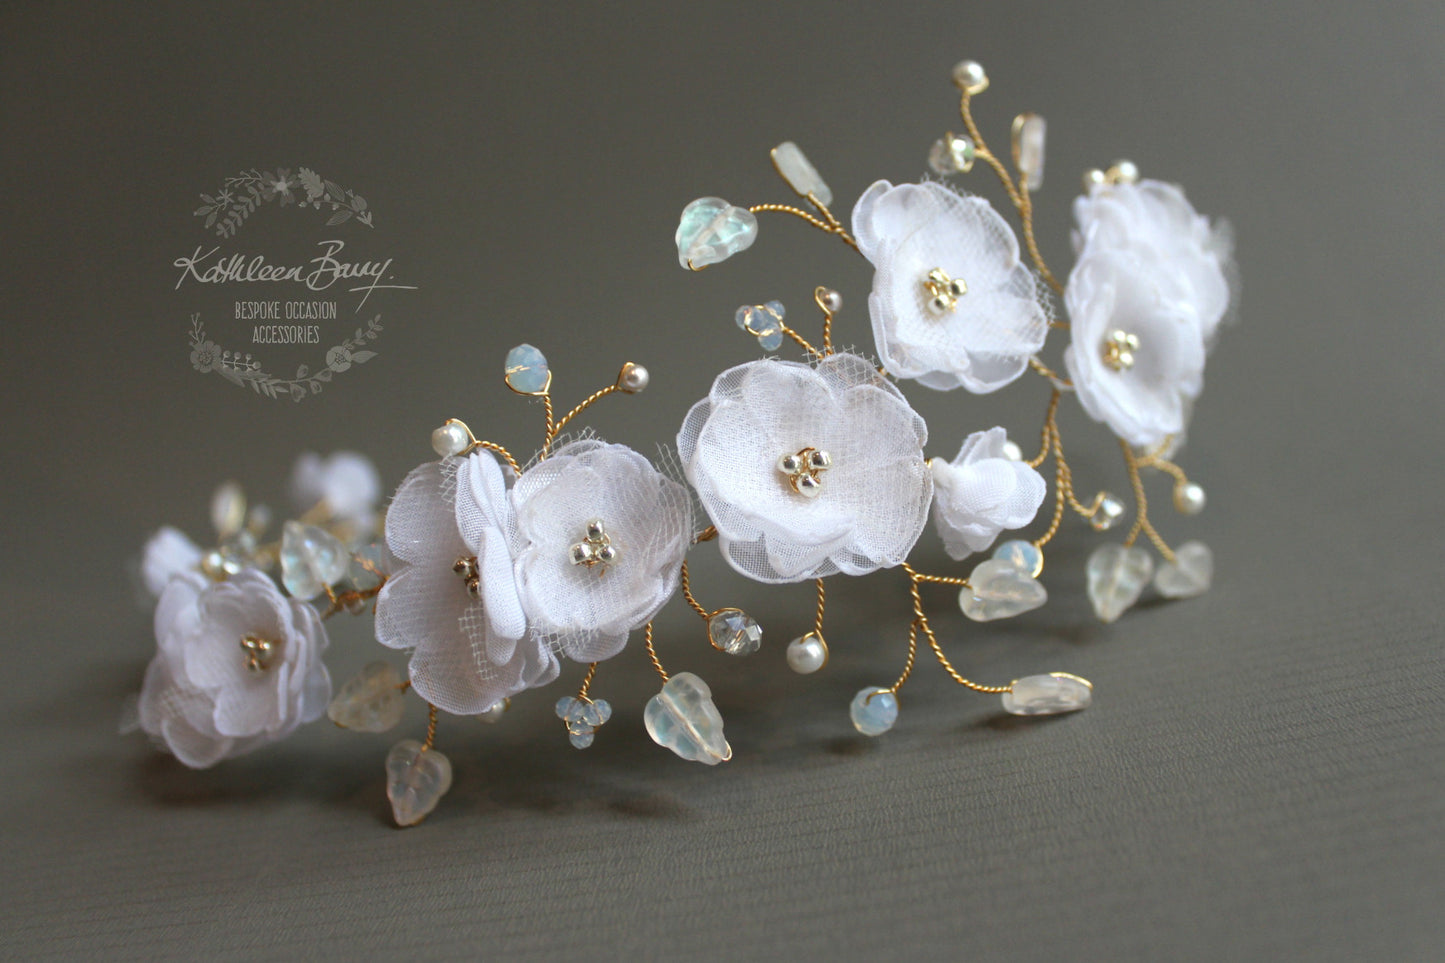 Lilly-Belle Aqua Gold white hair vine, blossom wedding bridal hair accessory wedding bride flower crown wreath - opalescent crystals - blue